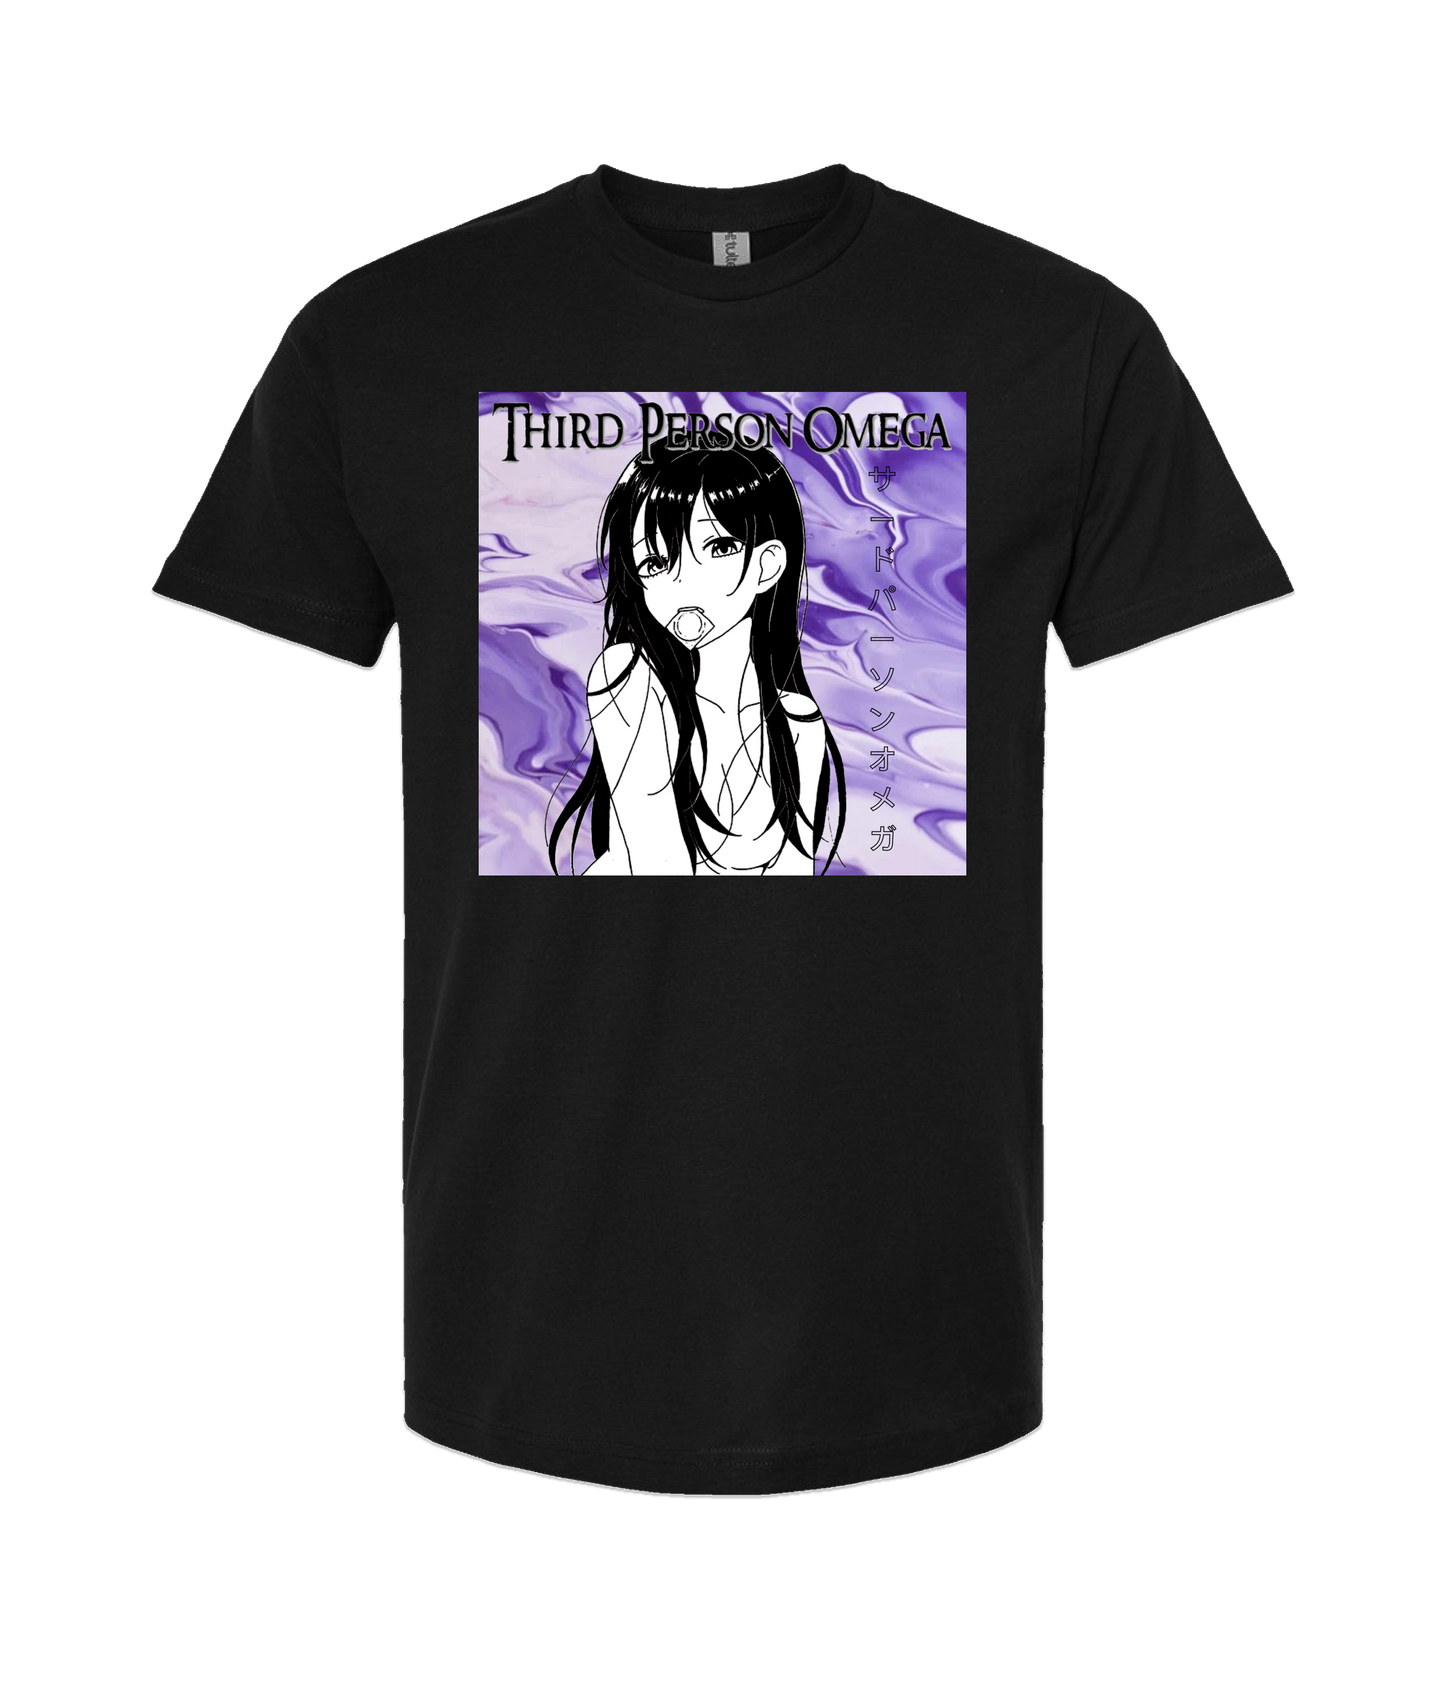 Third Person Omega - ANIME GIRL - Black T Shirt